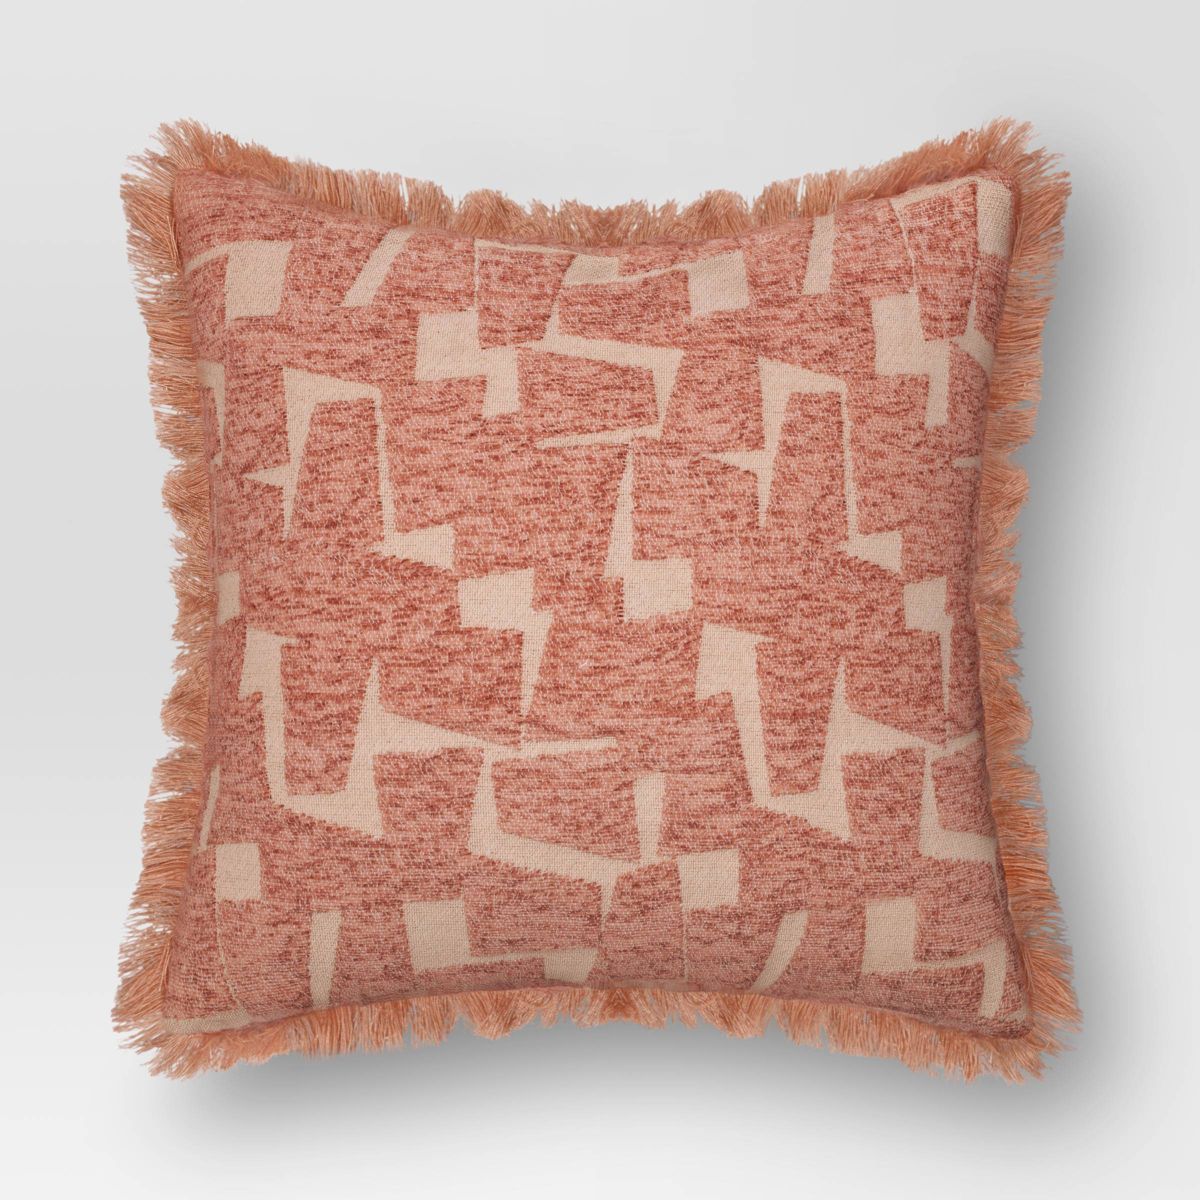 Geometric Patterned Cut Velvet Cotton Blend Square Throw Pillow - Threshold™ | Target